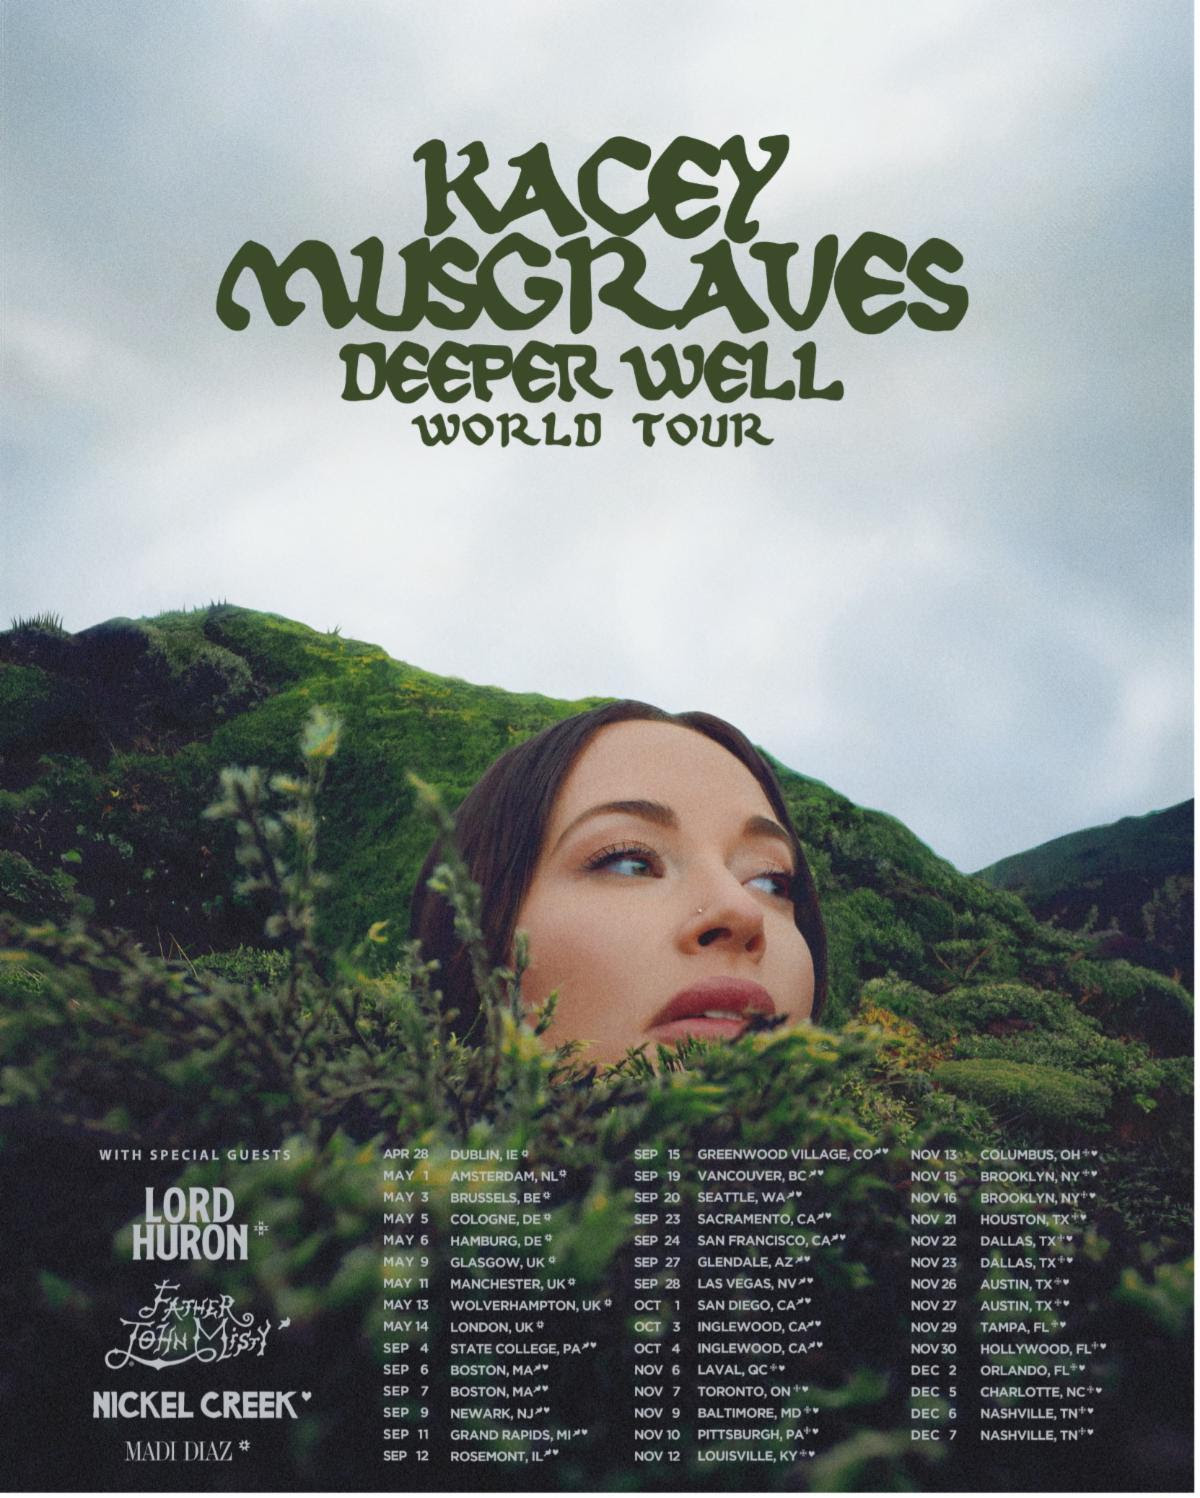 Kacey Musgraves world tour poster